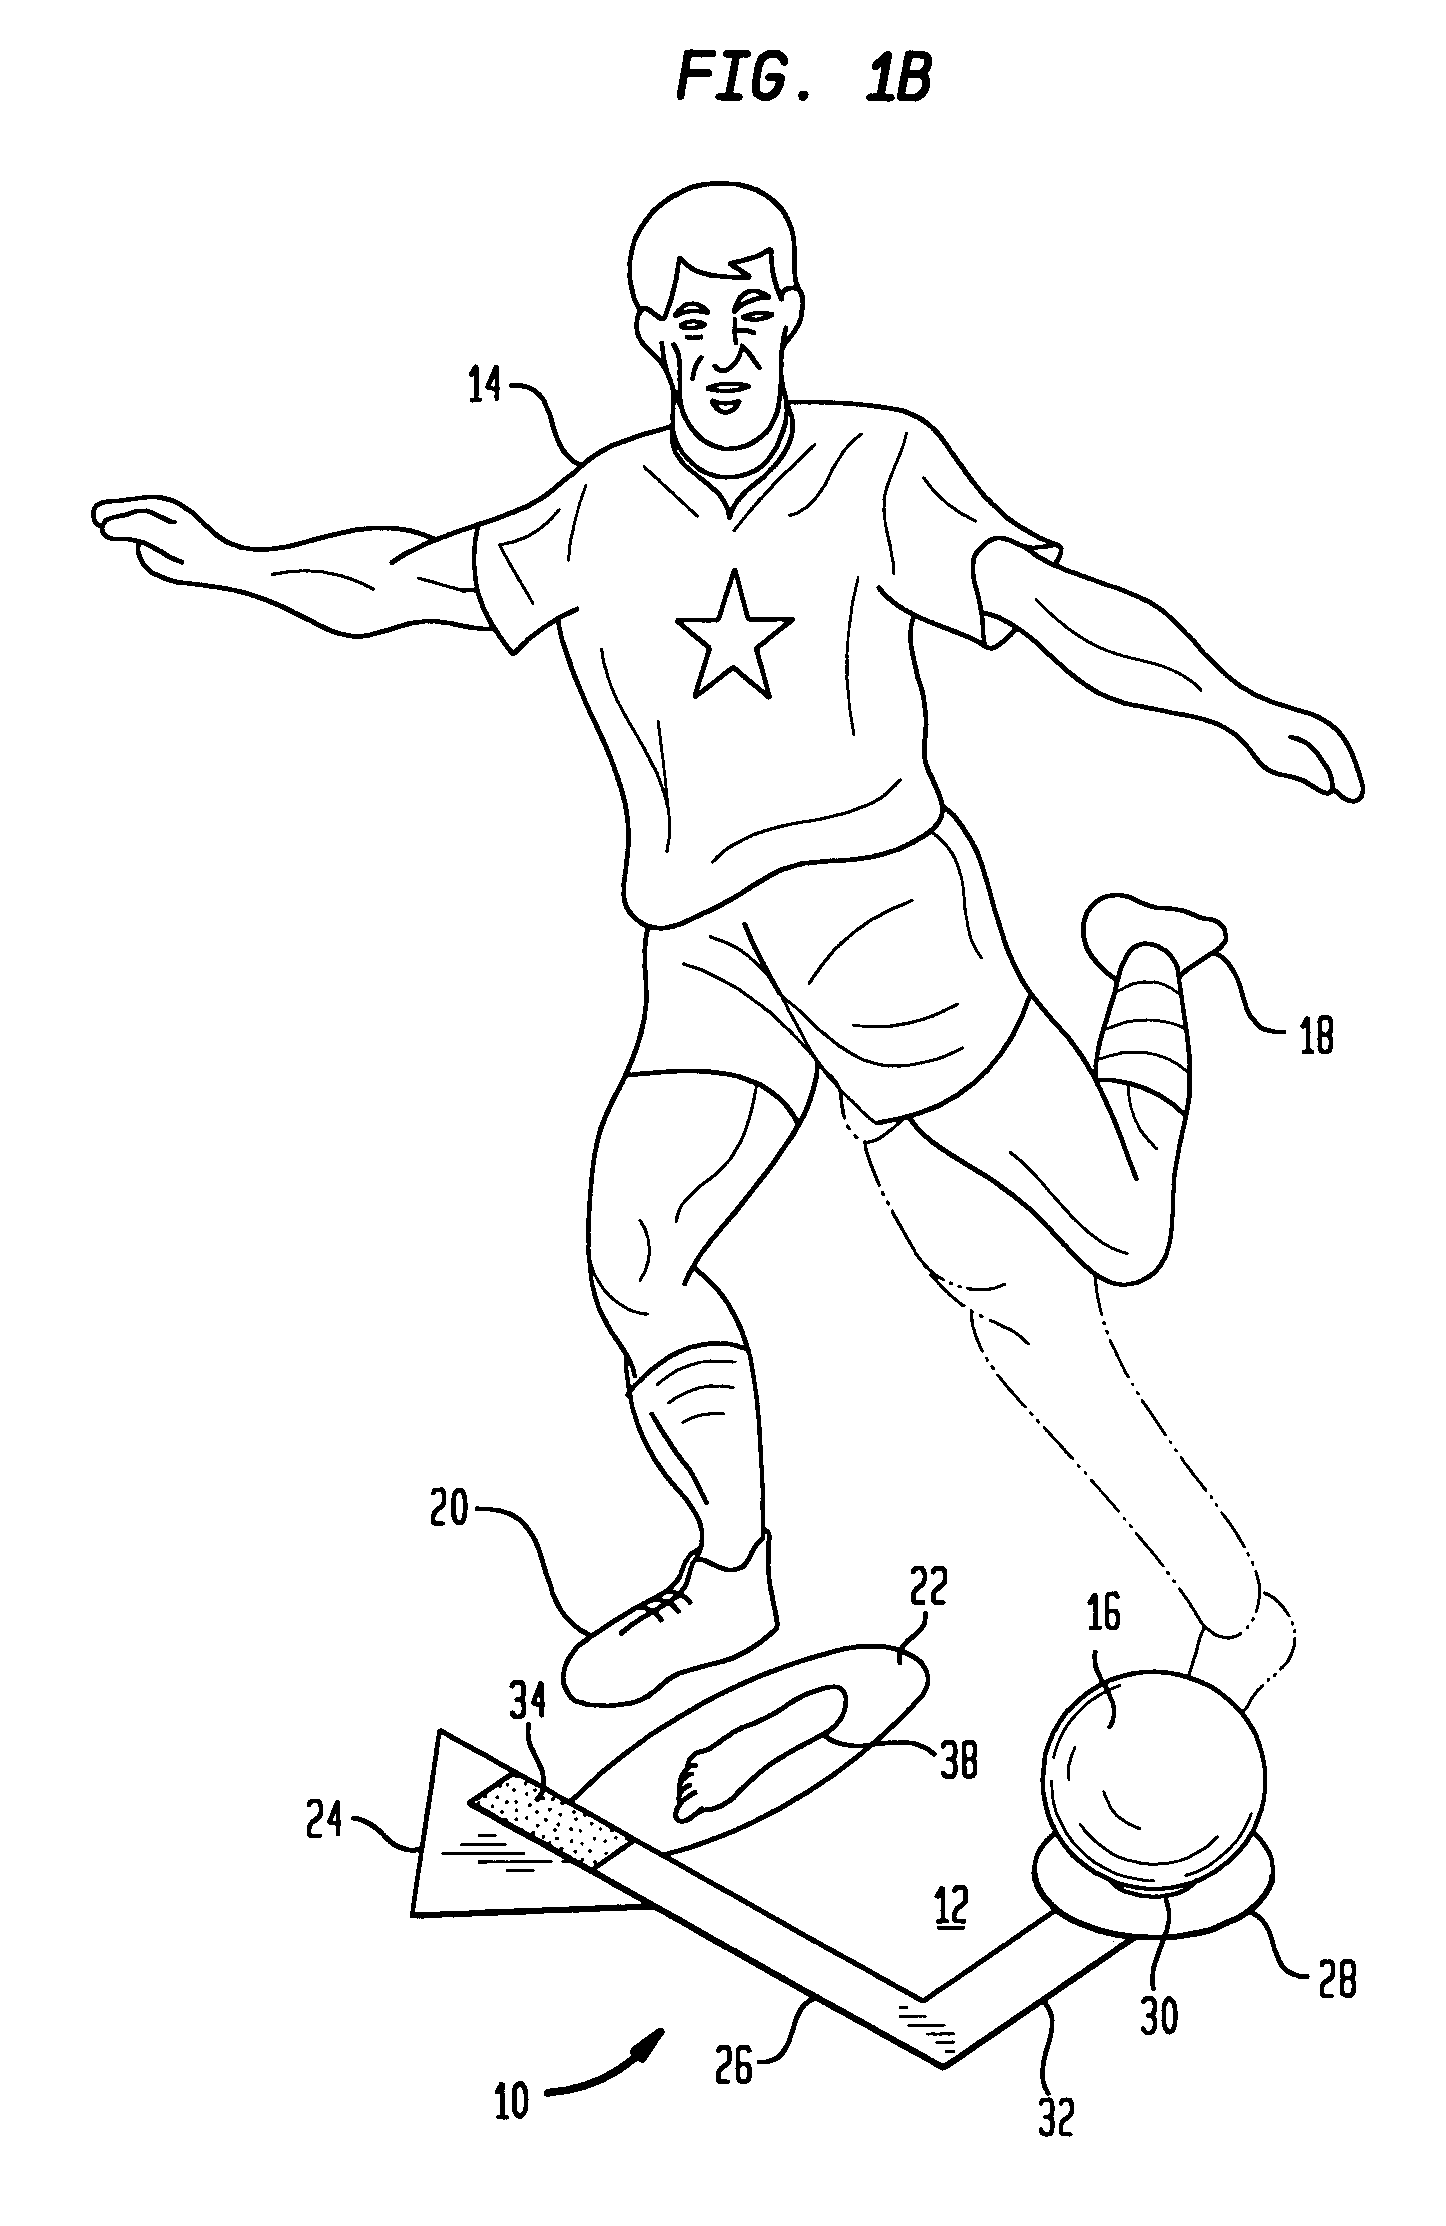 Soccer ball kicking training device